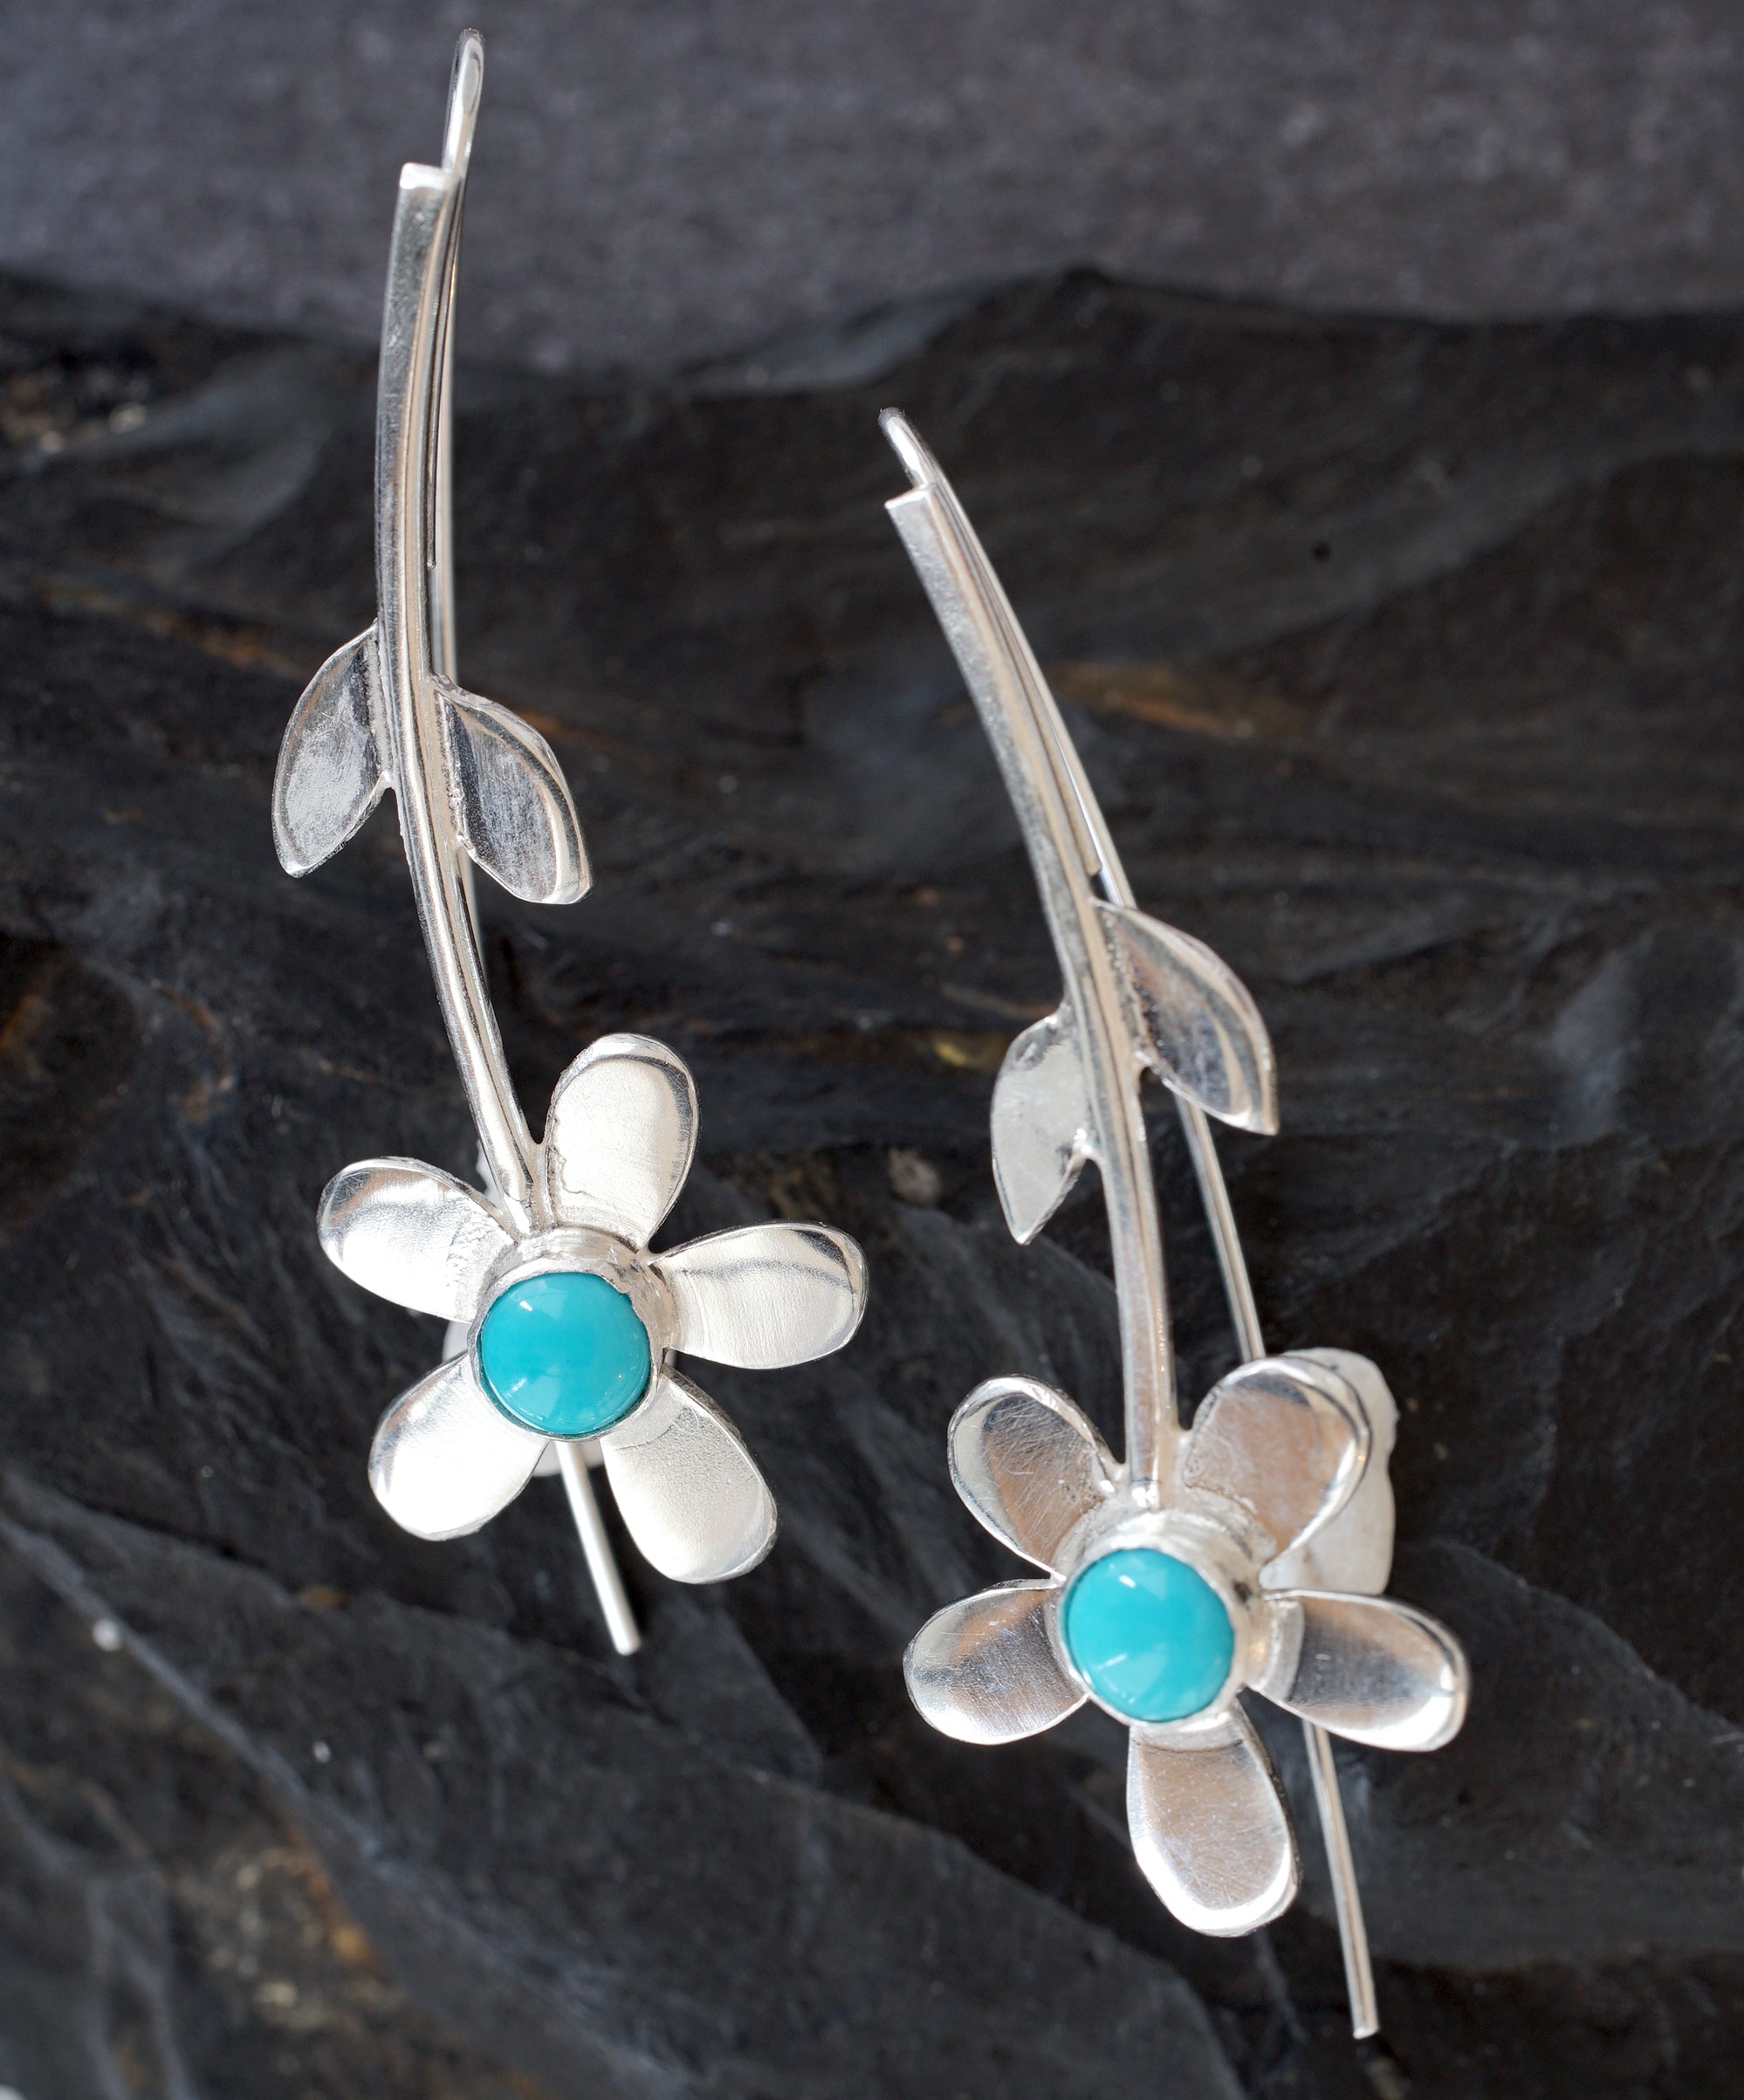 Daisy Chain sterling silver & turquoise drop earrings with stem from Angela Kelly Jewellery Enniskillen Fermanagh